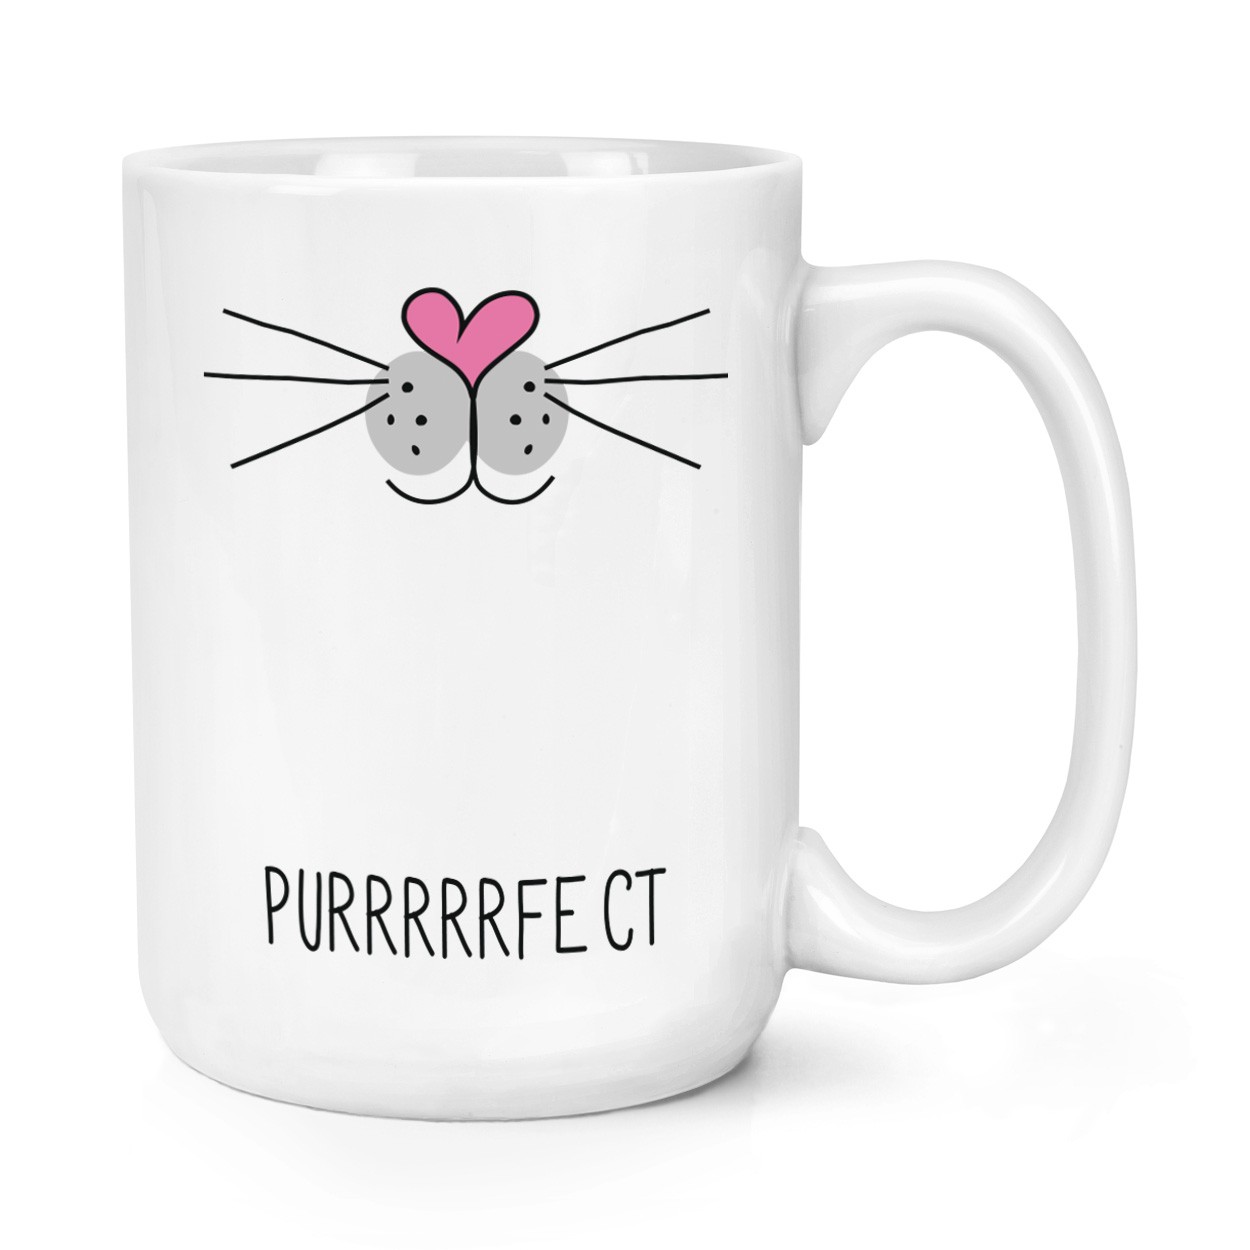 Purrrfect Cat Face 15oz Large Mug Cup